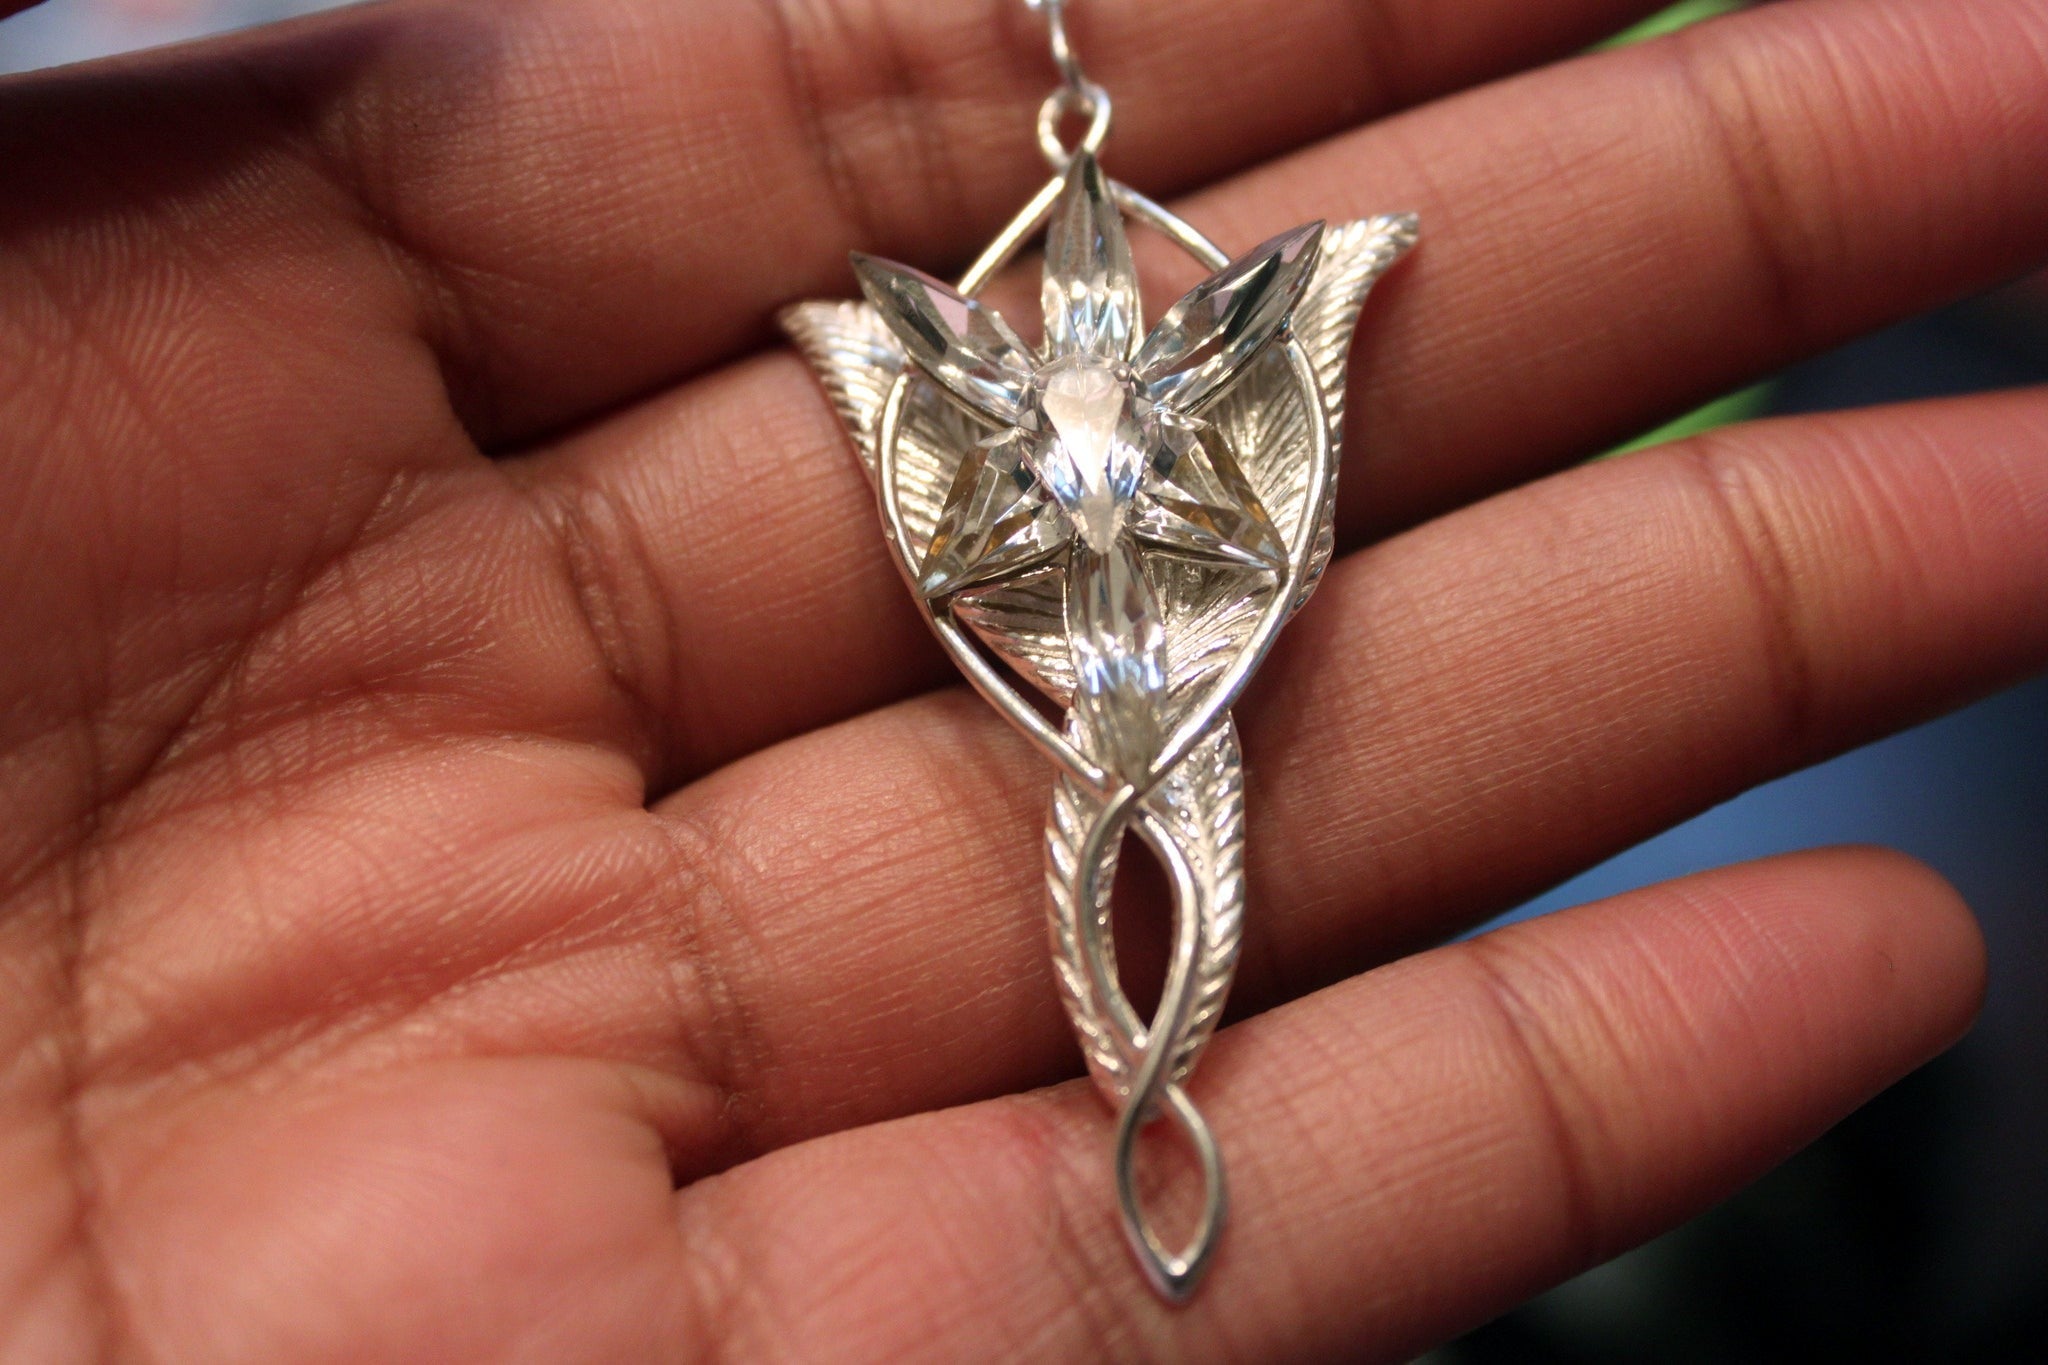 LOTR Arwen 925 Sterling Silver Necklace - Silver Equinox